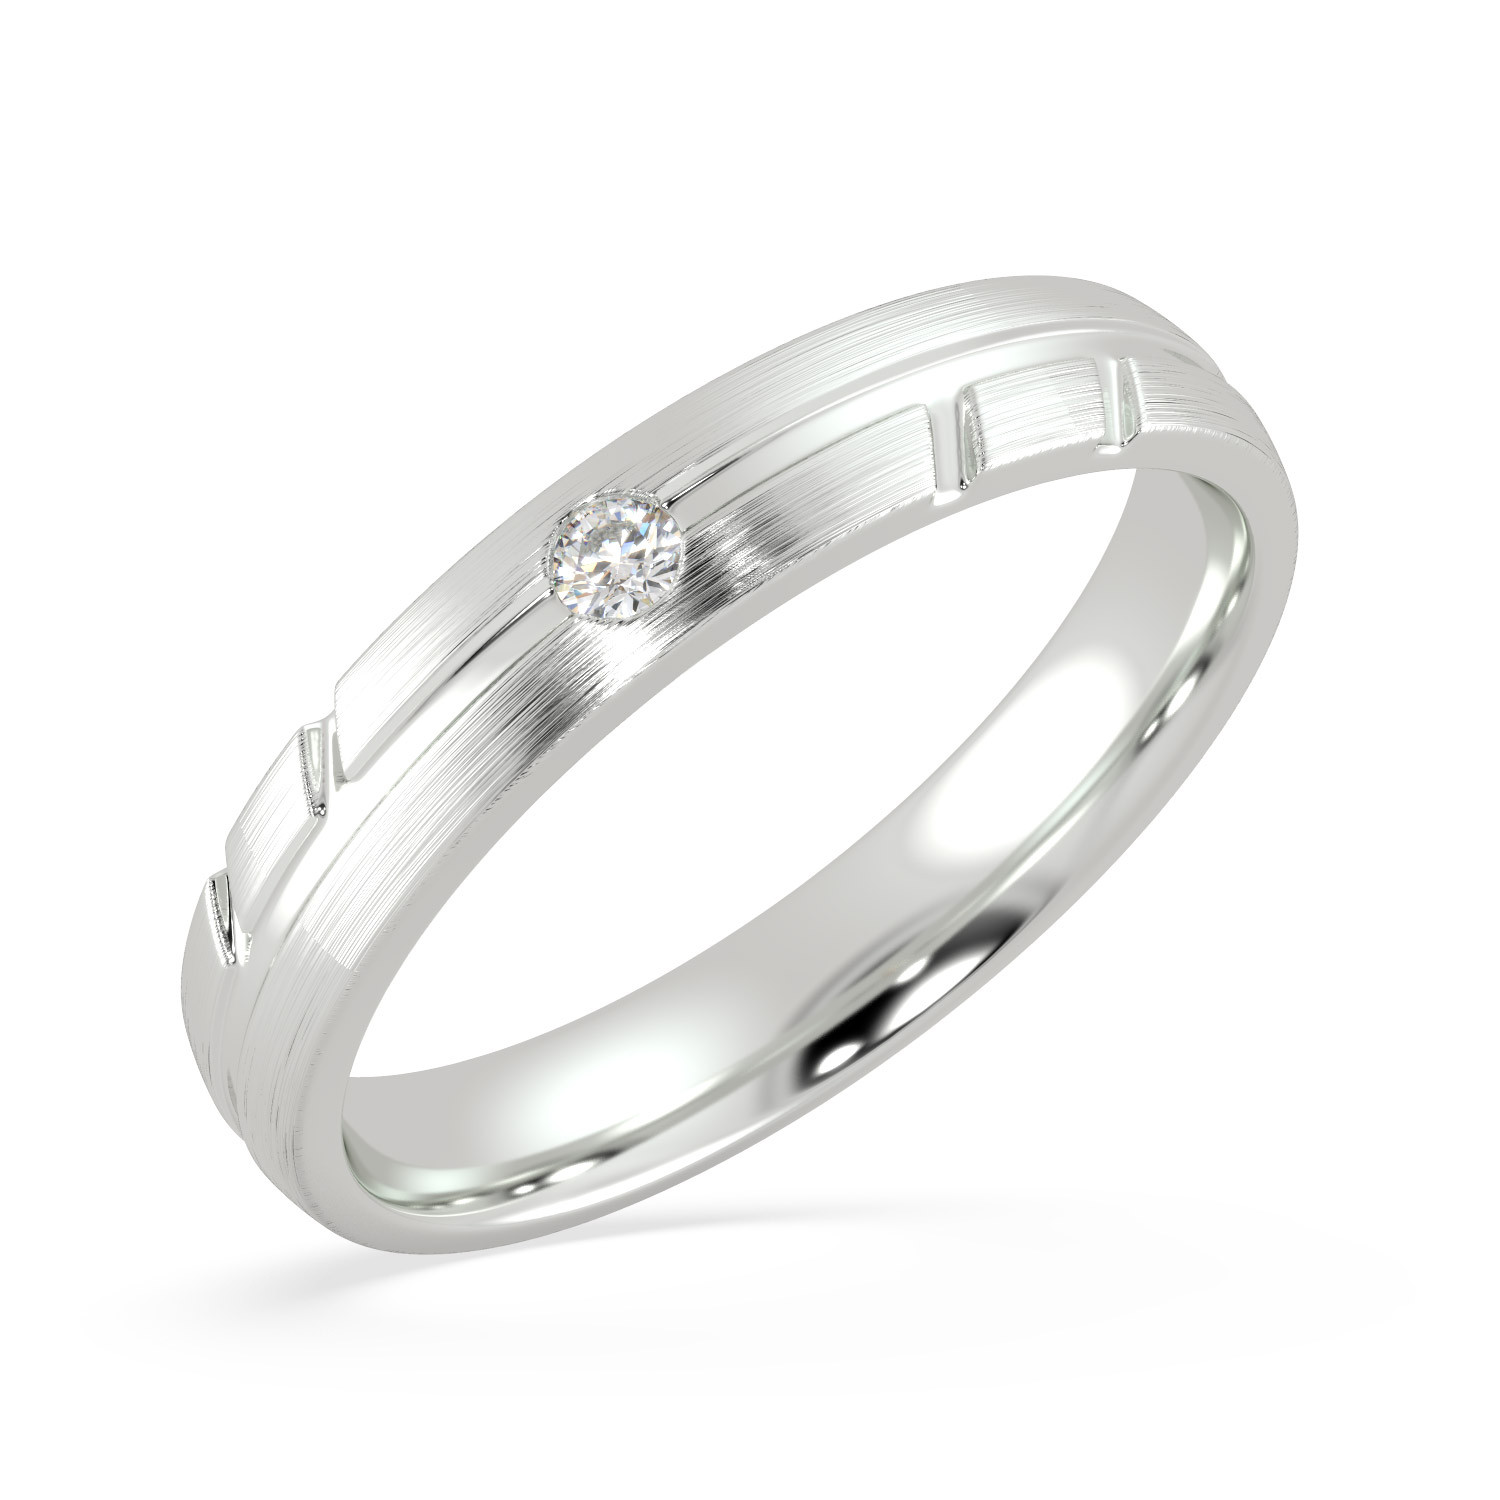 Malabar Gold & Diamonds on Behance | Buy diamond ring, Gold diamond, Diamond  rings design